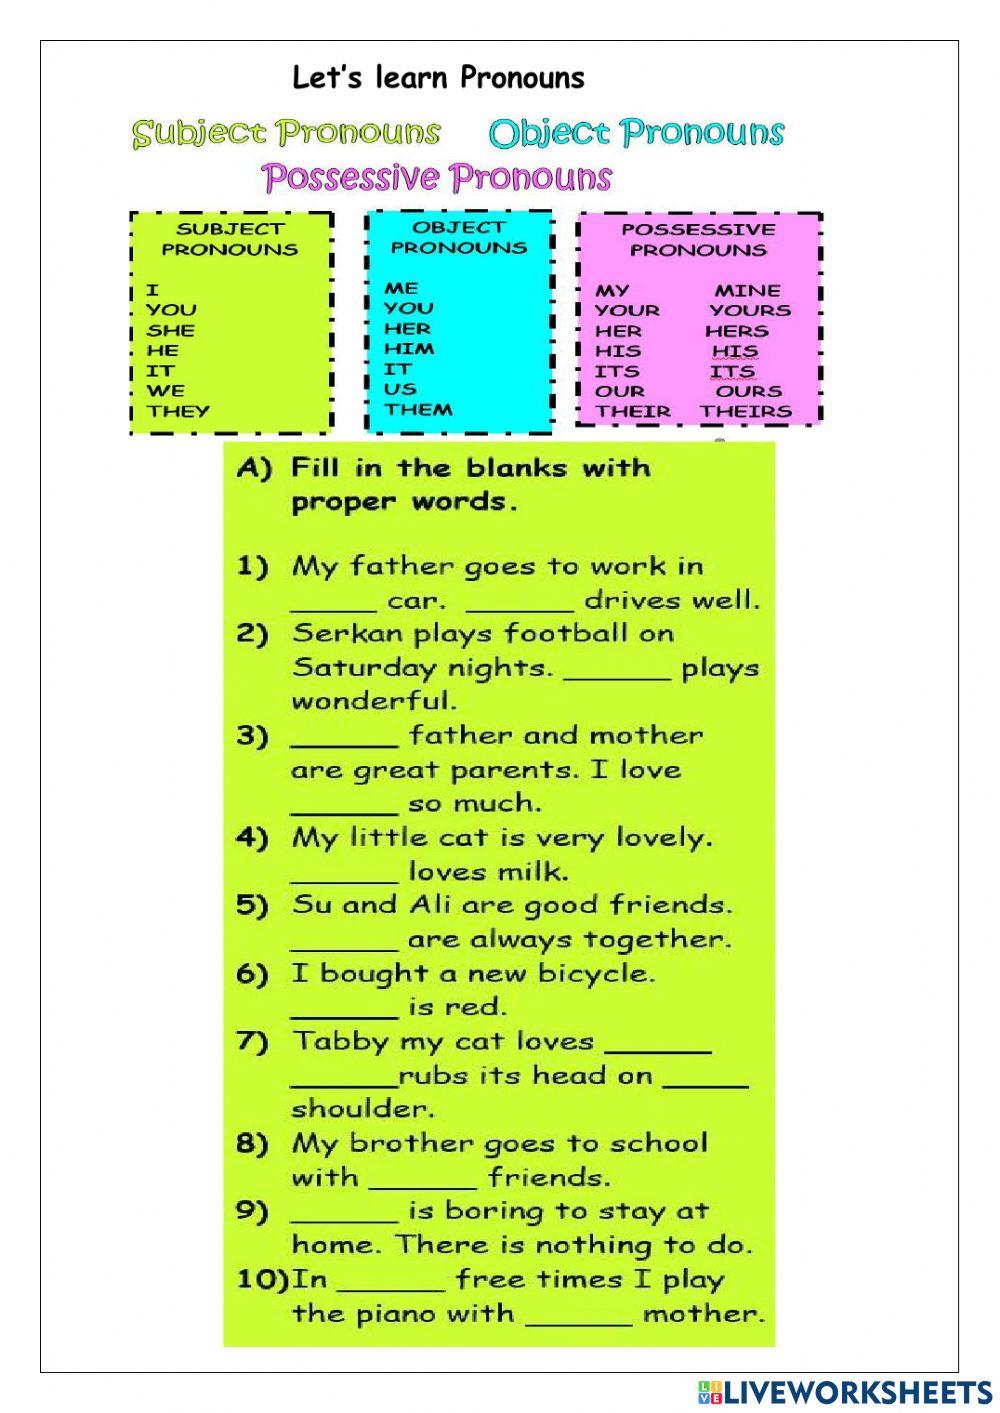 Pronouns-Classwork-1-CS